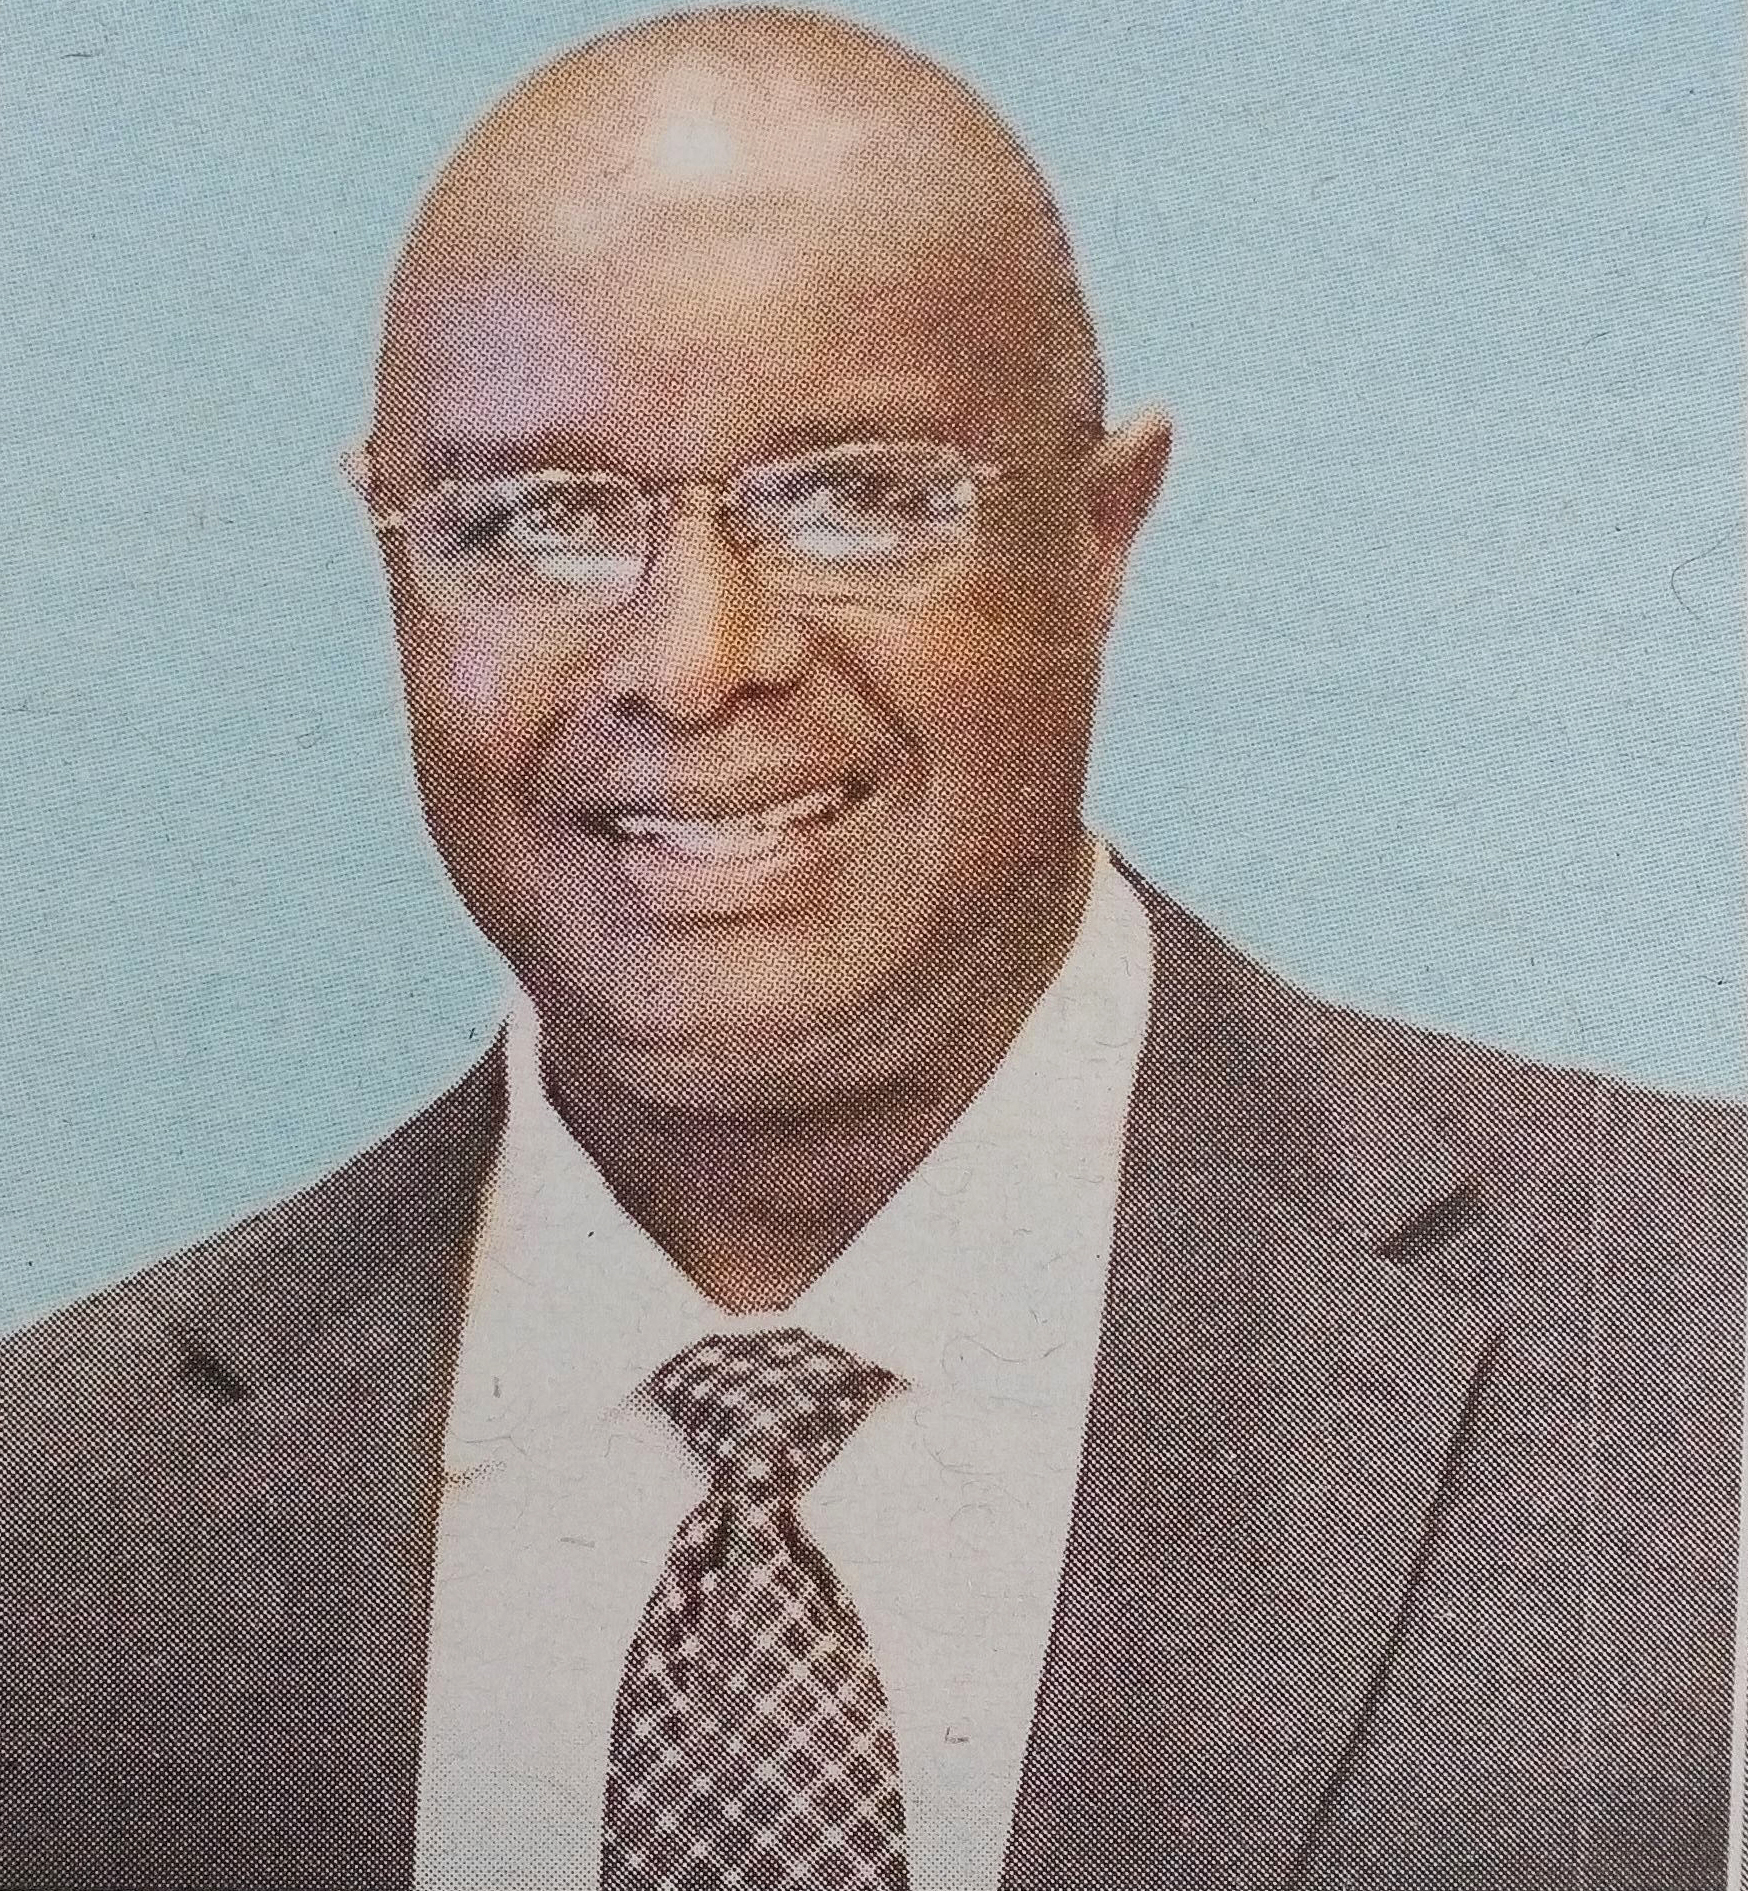 Obituary Image of Professor Samson Mwangi Kimeny